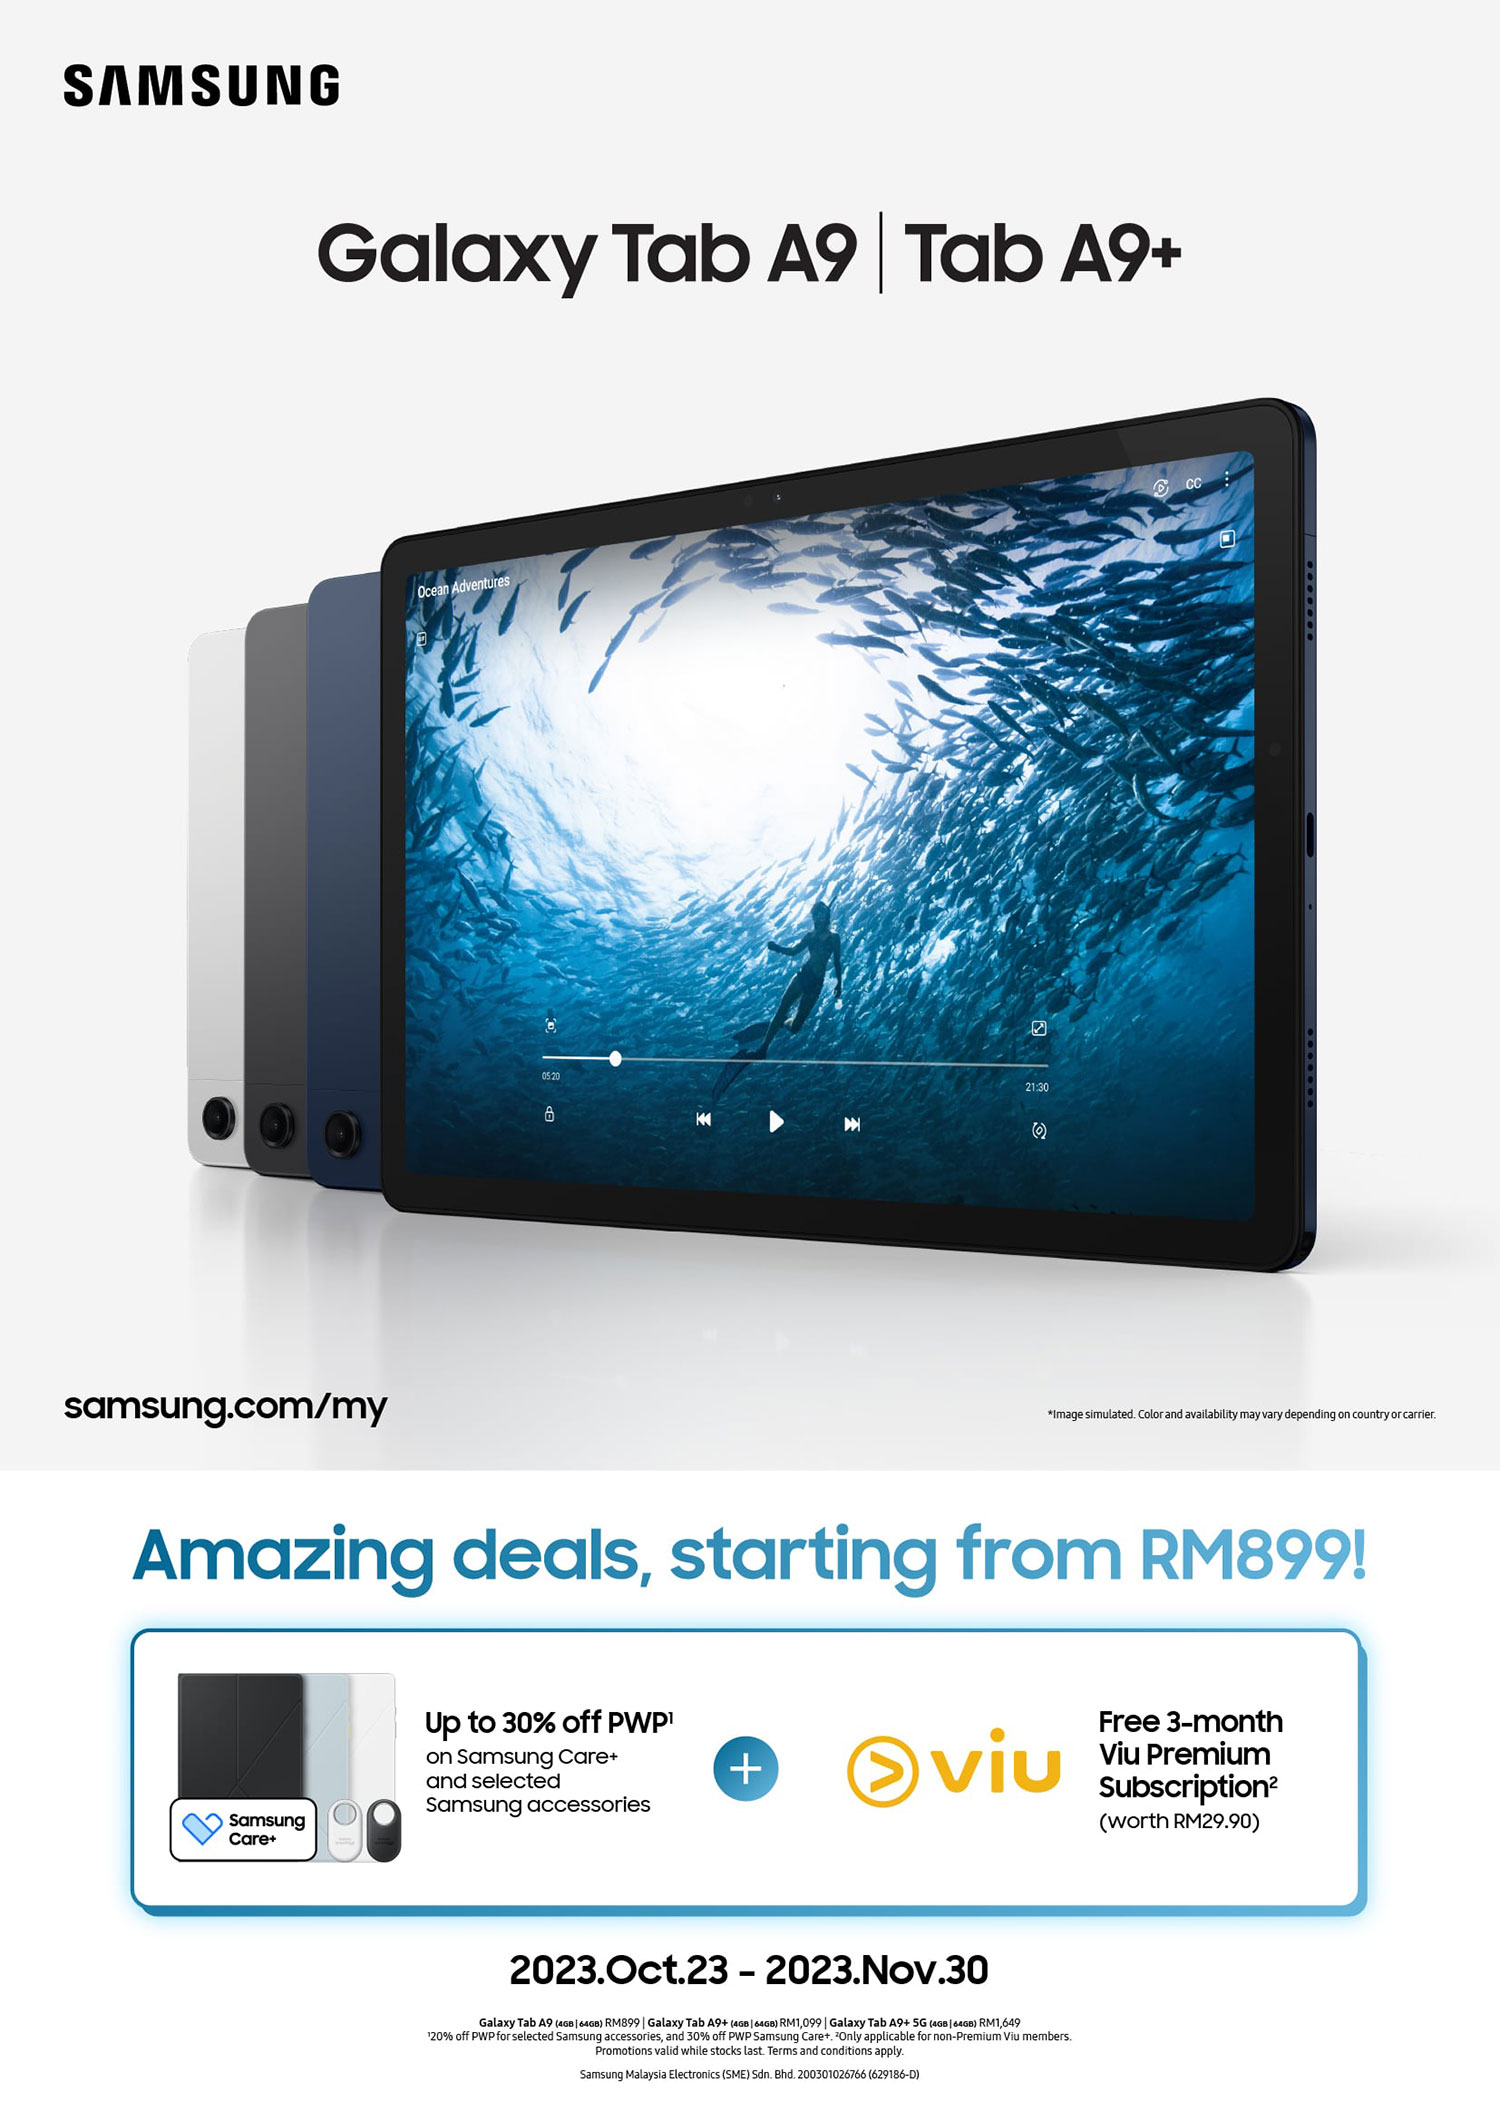 Samsung Galaxy Tab A9 Series Launch Promo